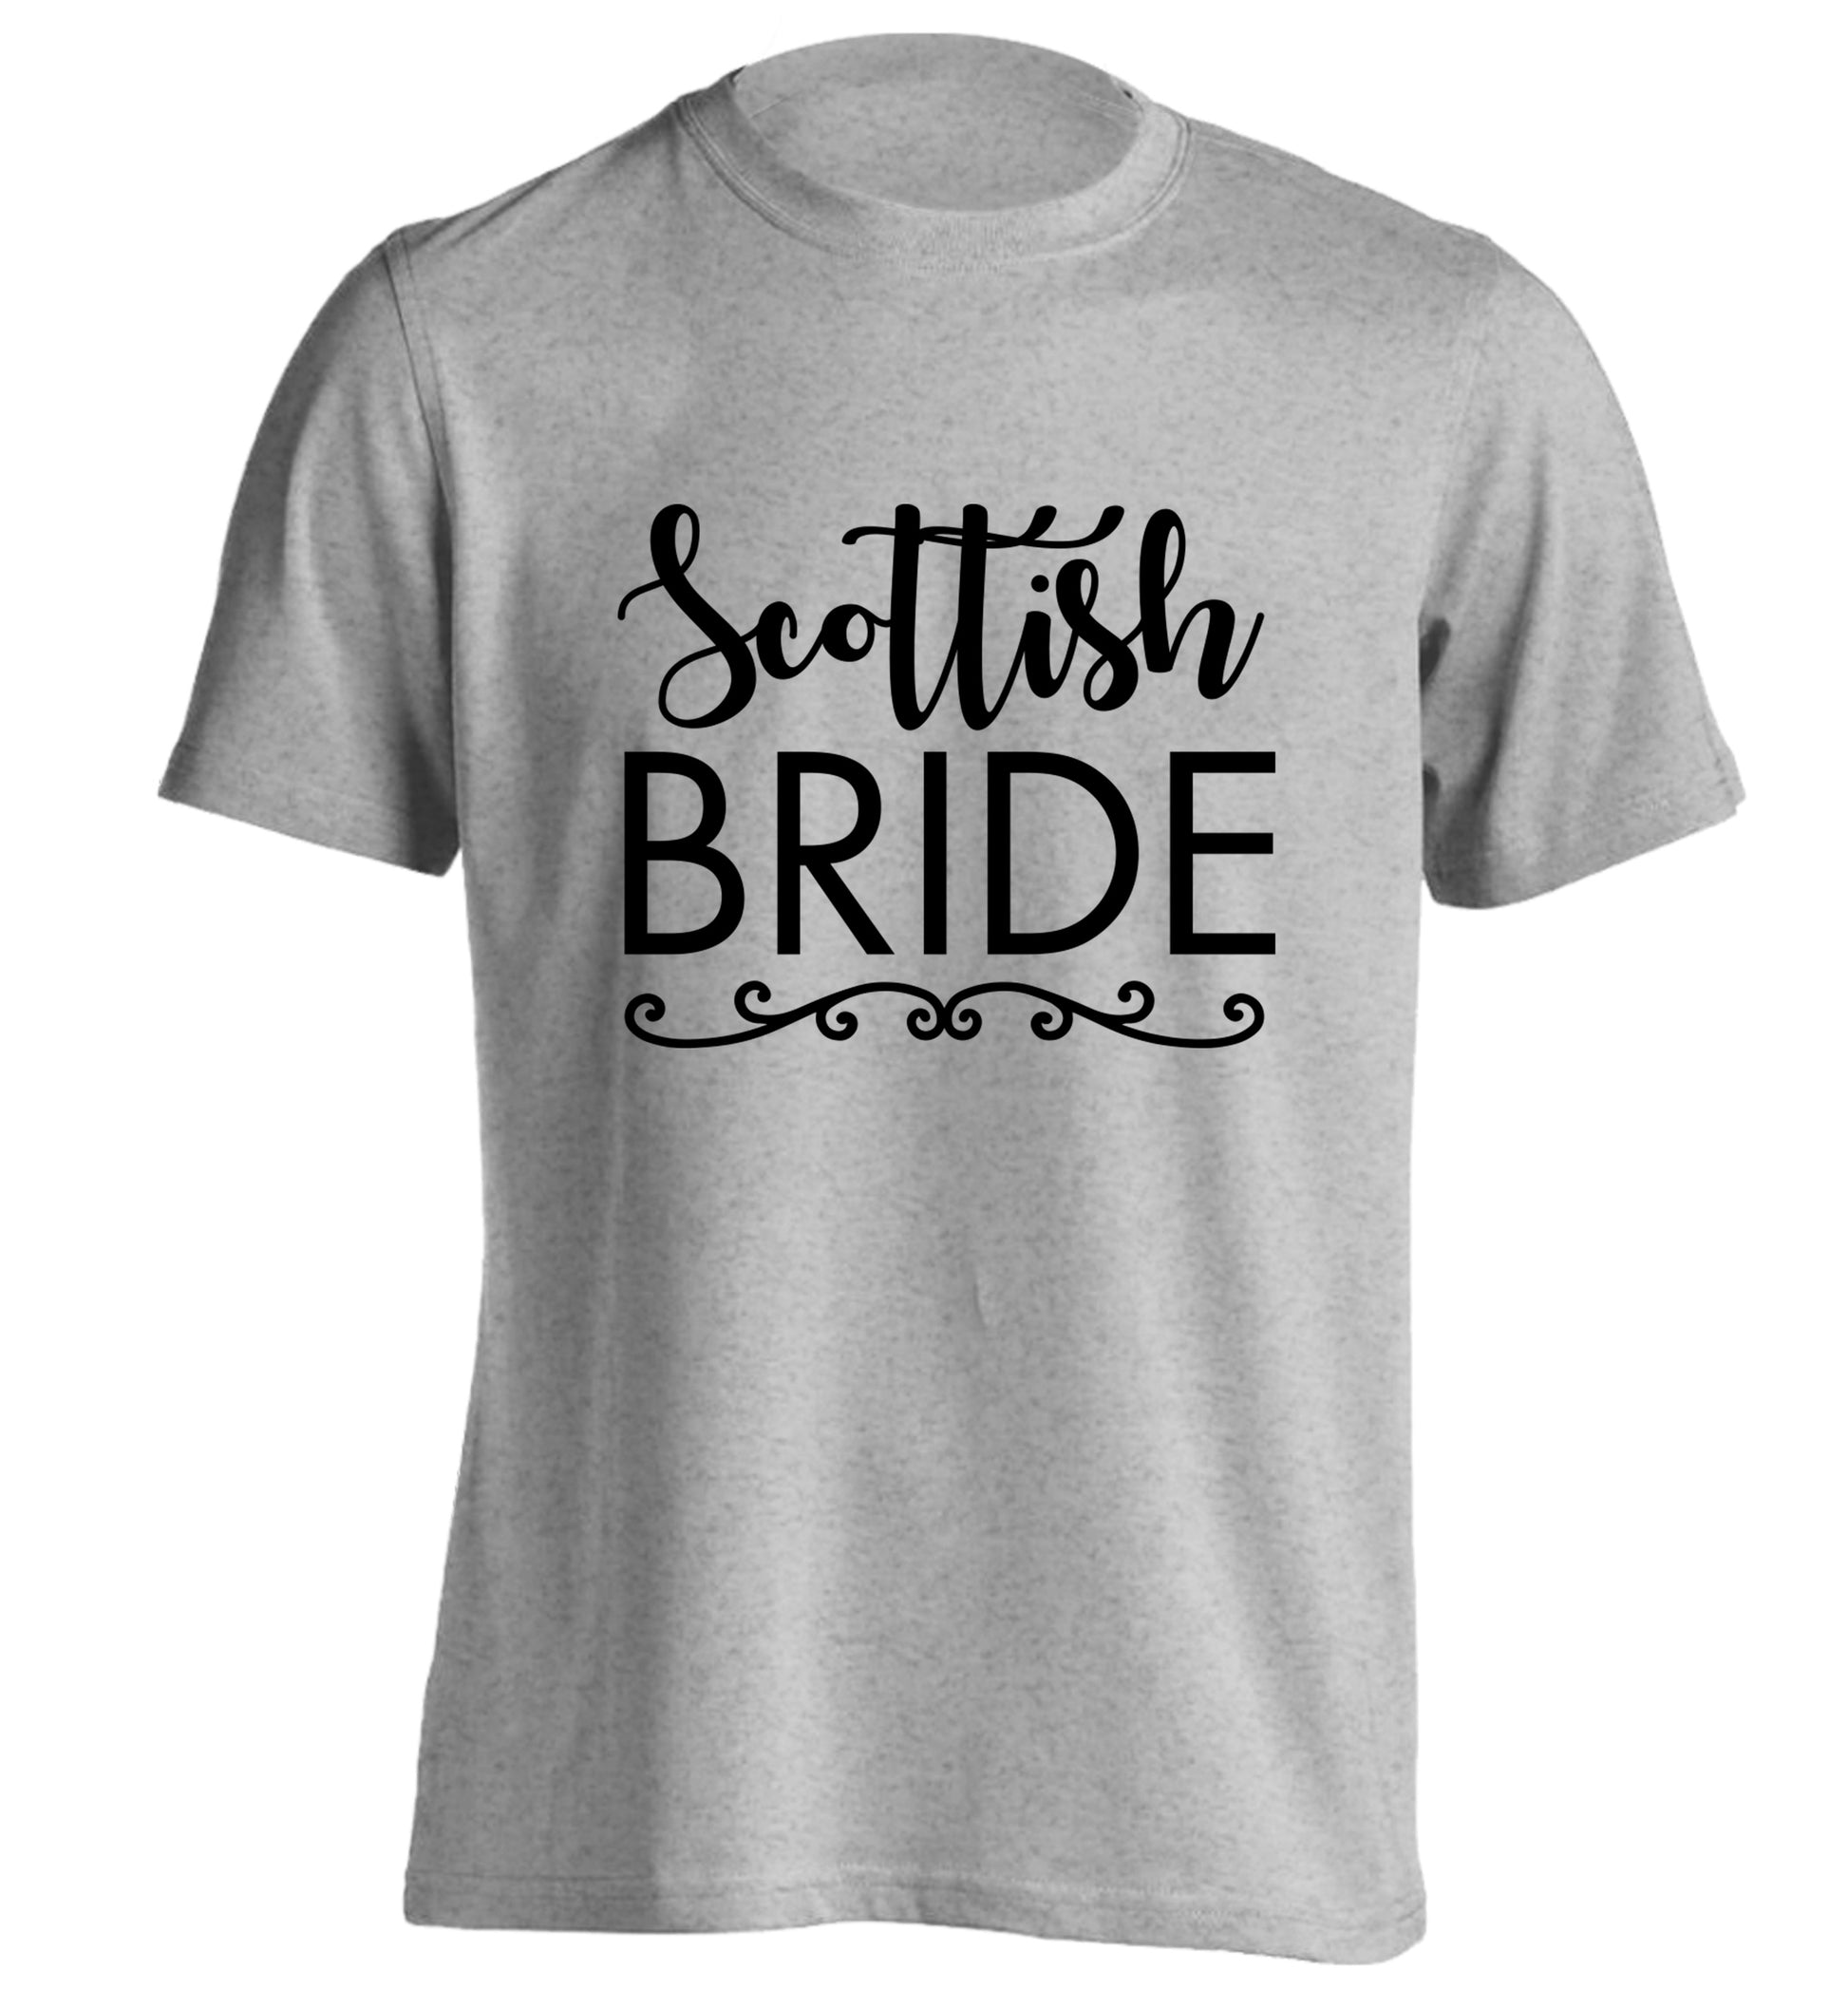 Scottish Bride adults unisex grey Tshirt 2XL